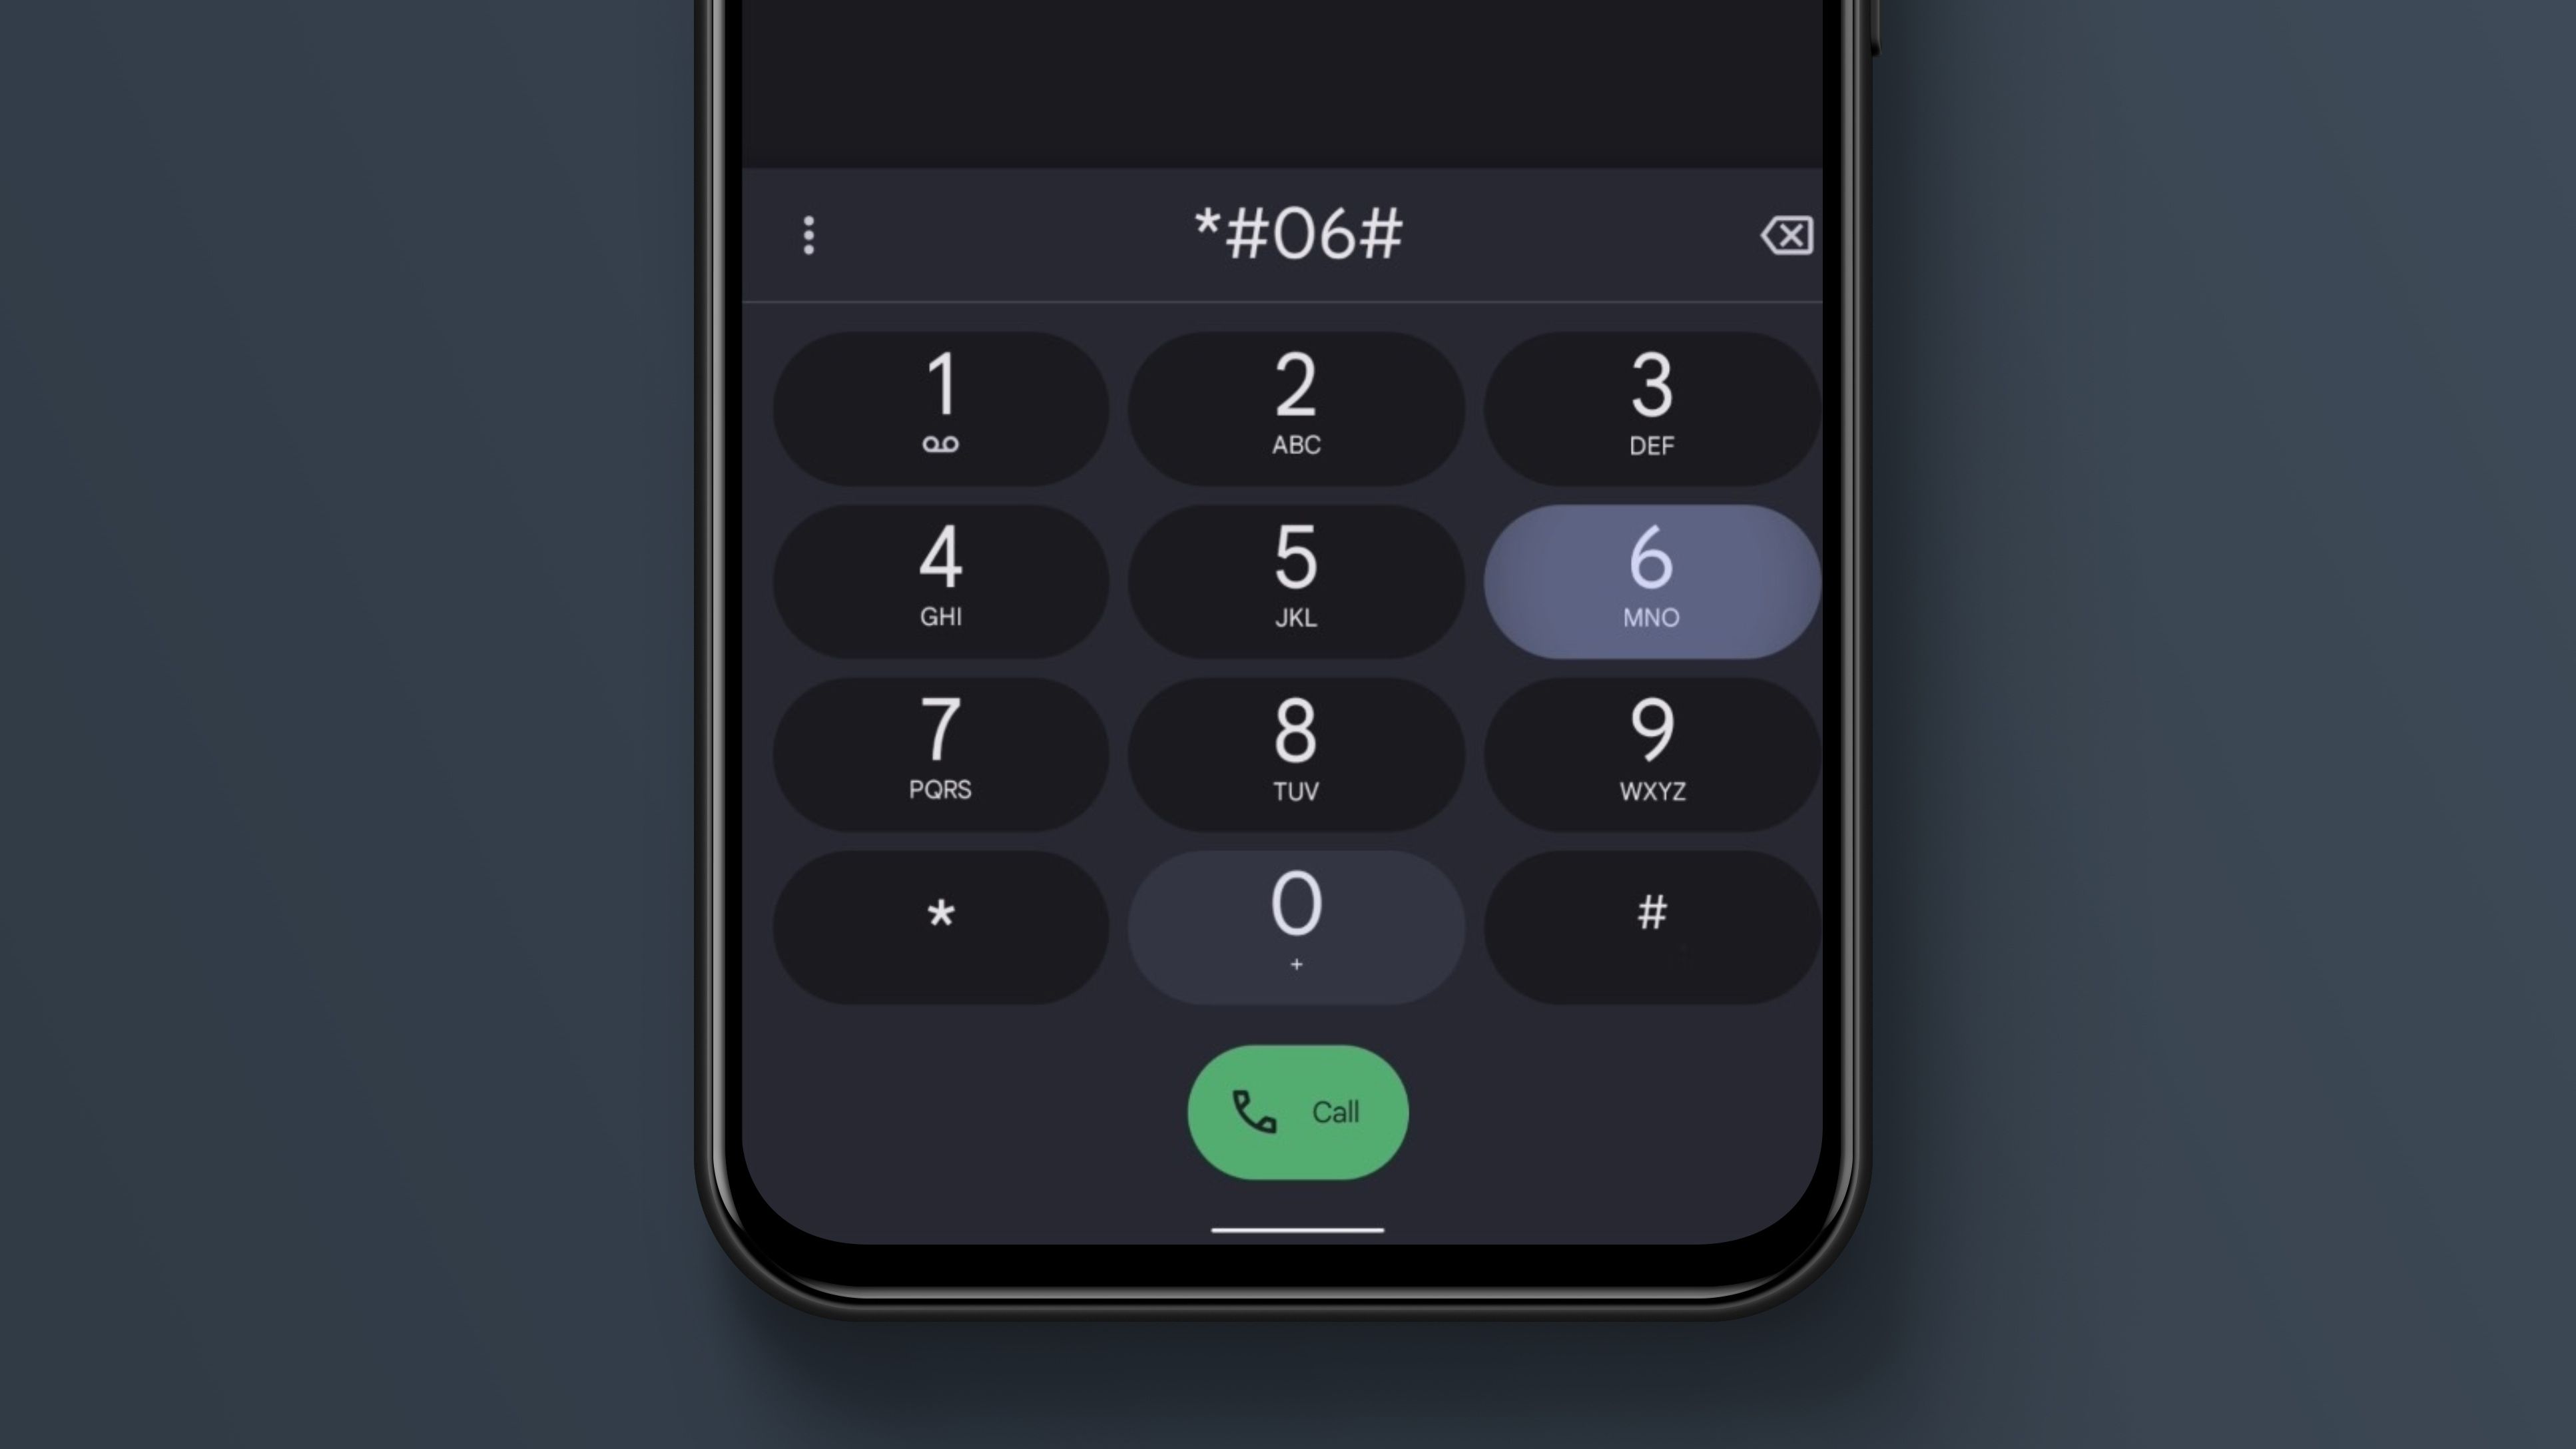 Phone app showing IMEI code dialing